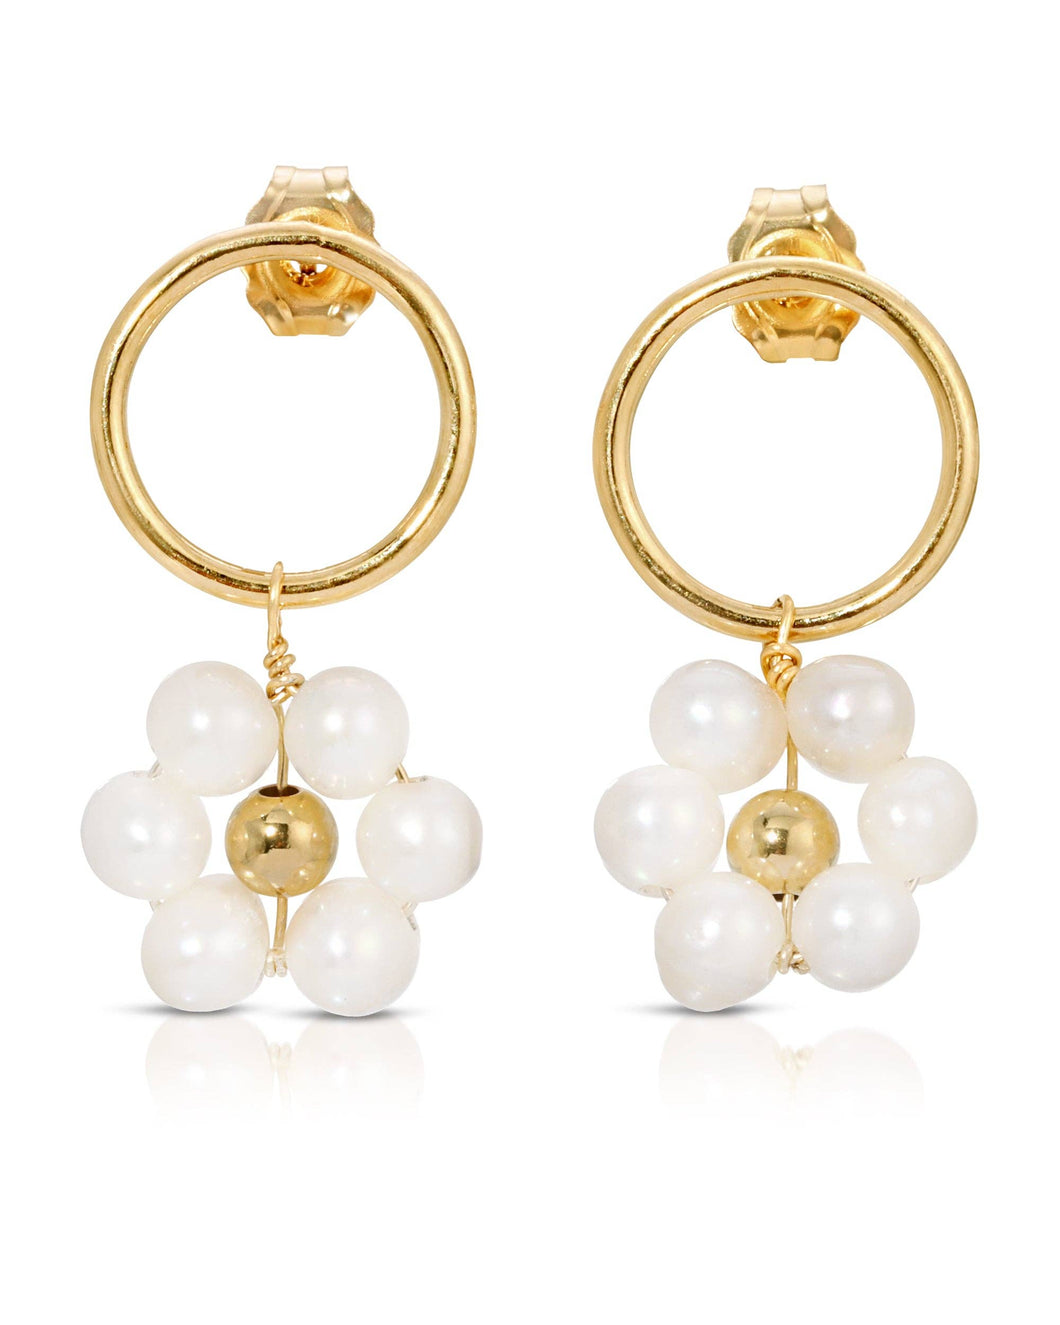 Girasol Earrings - 14K Gold Filled